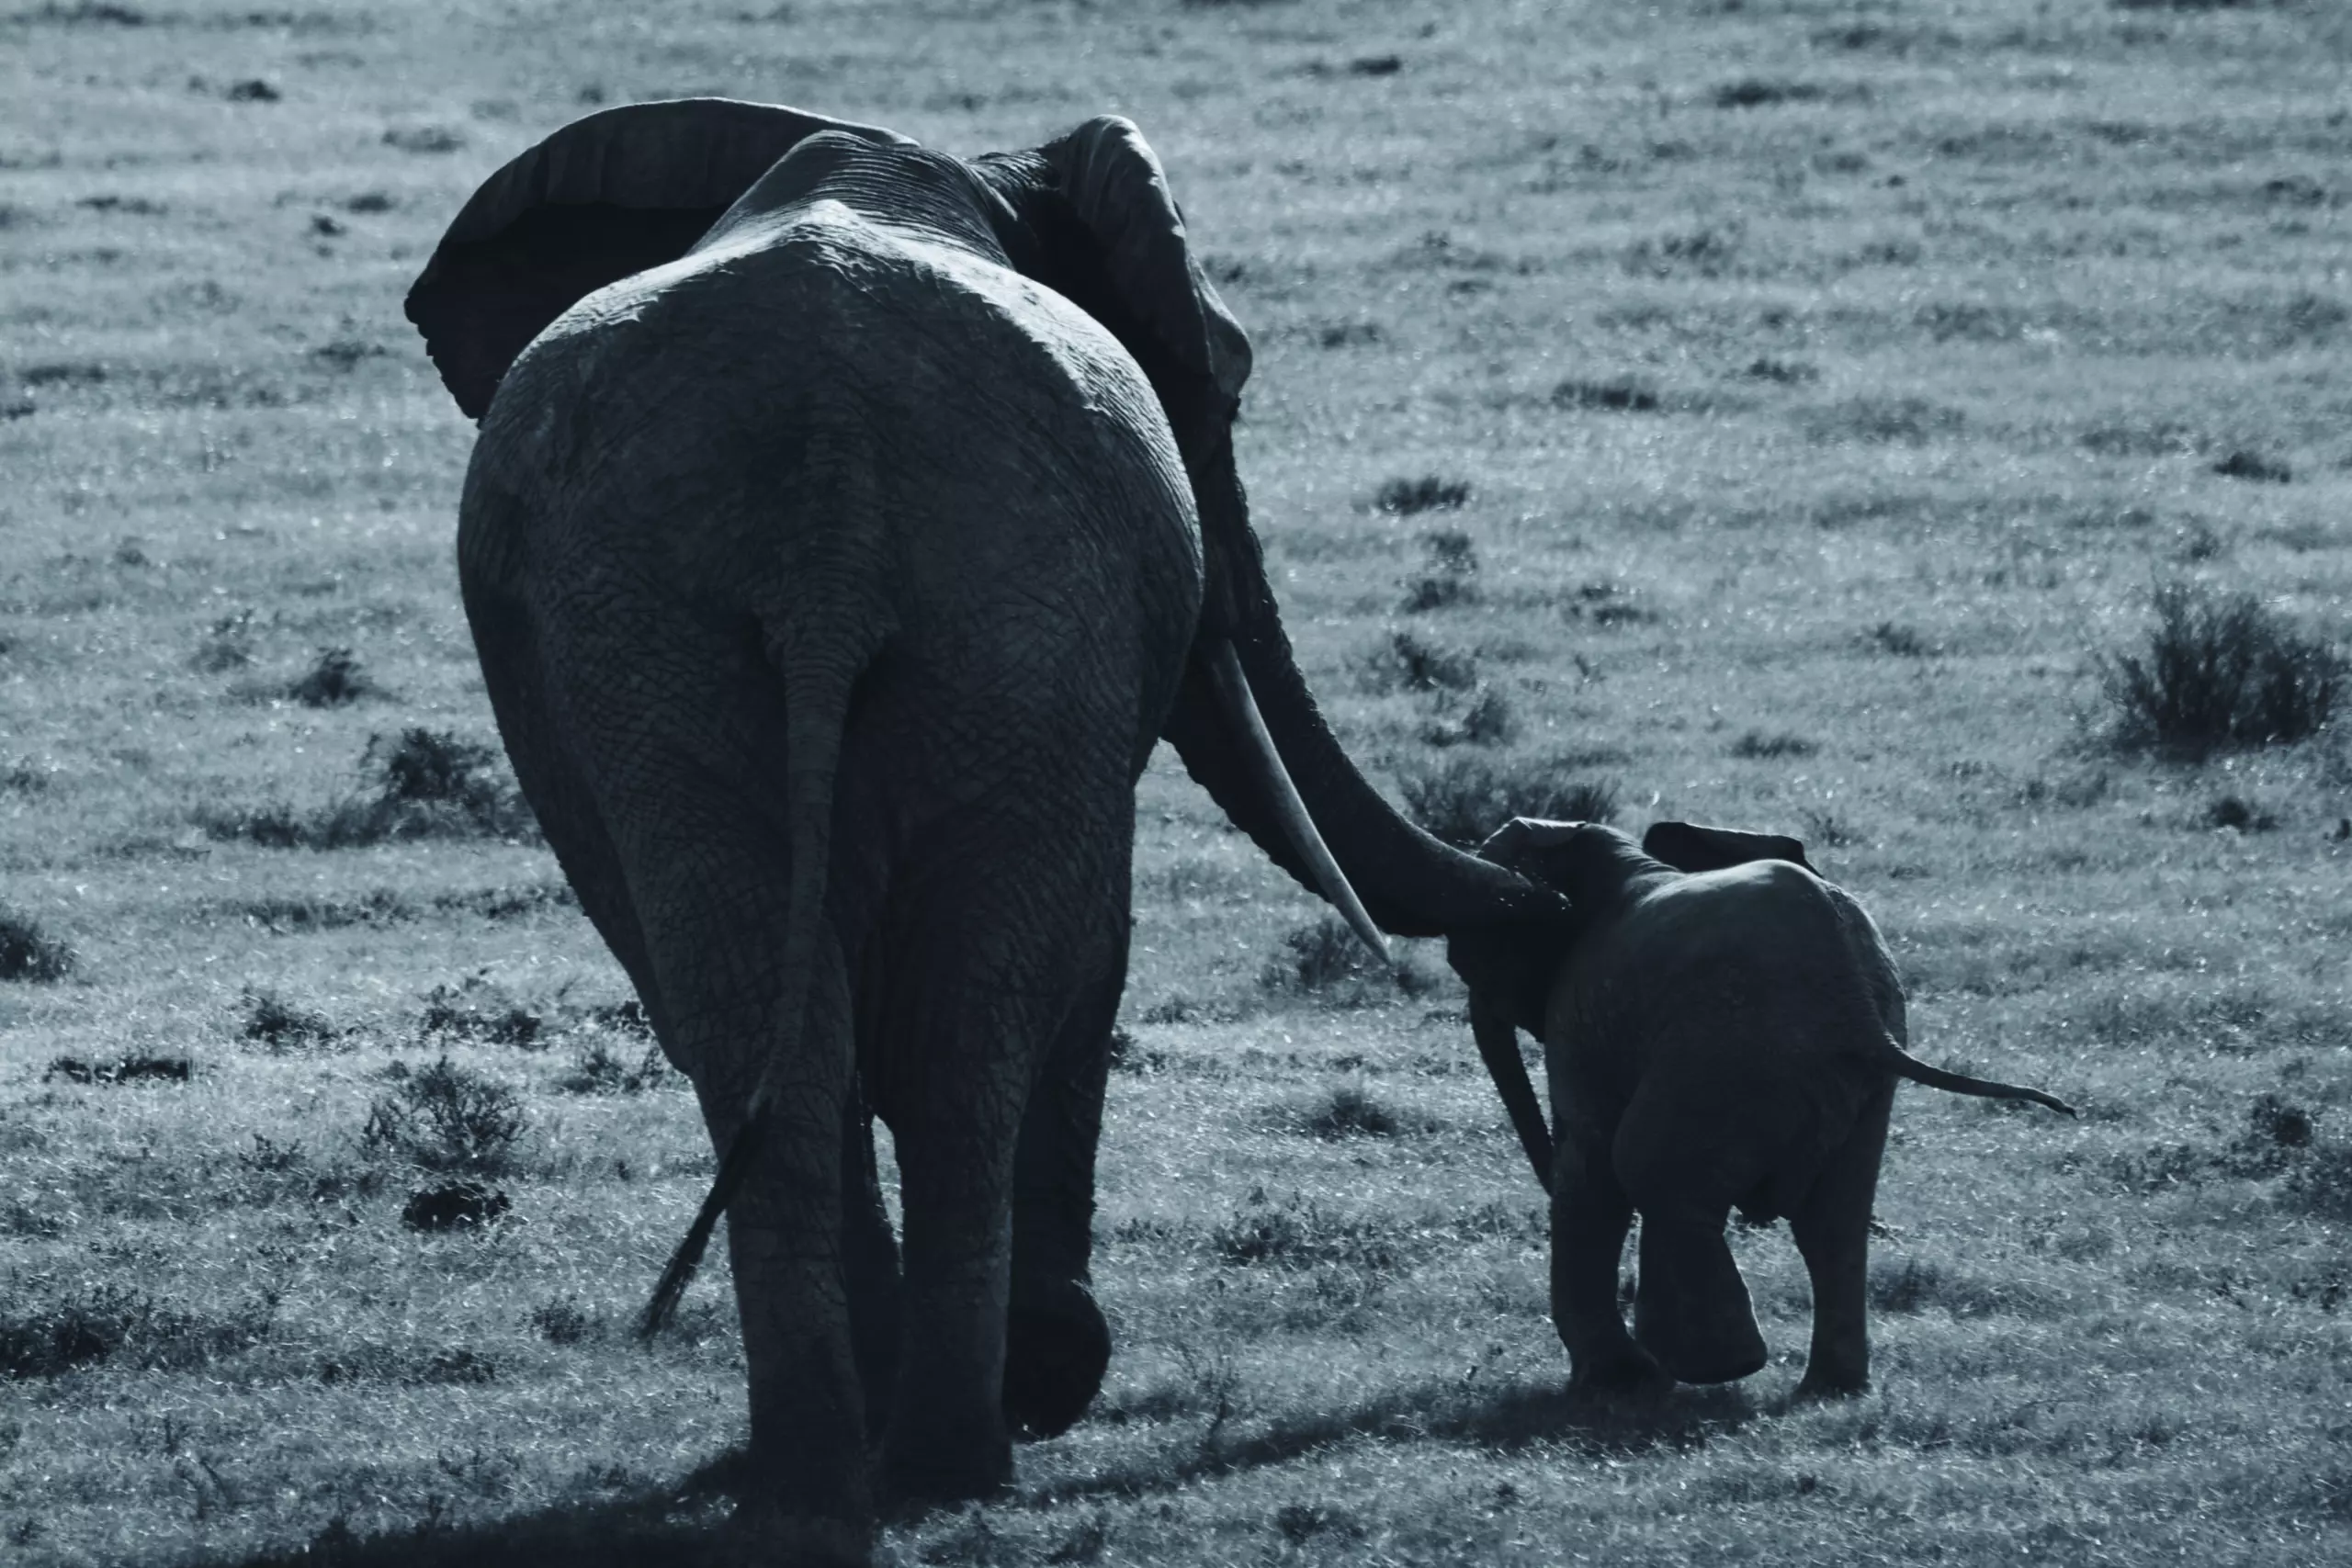 Wandbild (3447) Elephant 15 präsentiert: Tiere,Aus Afrika